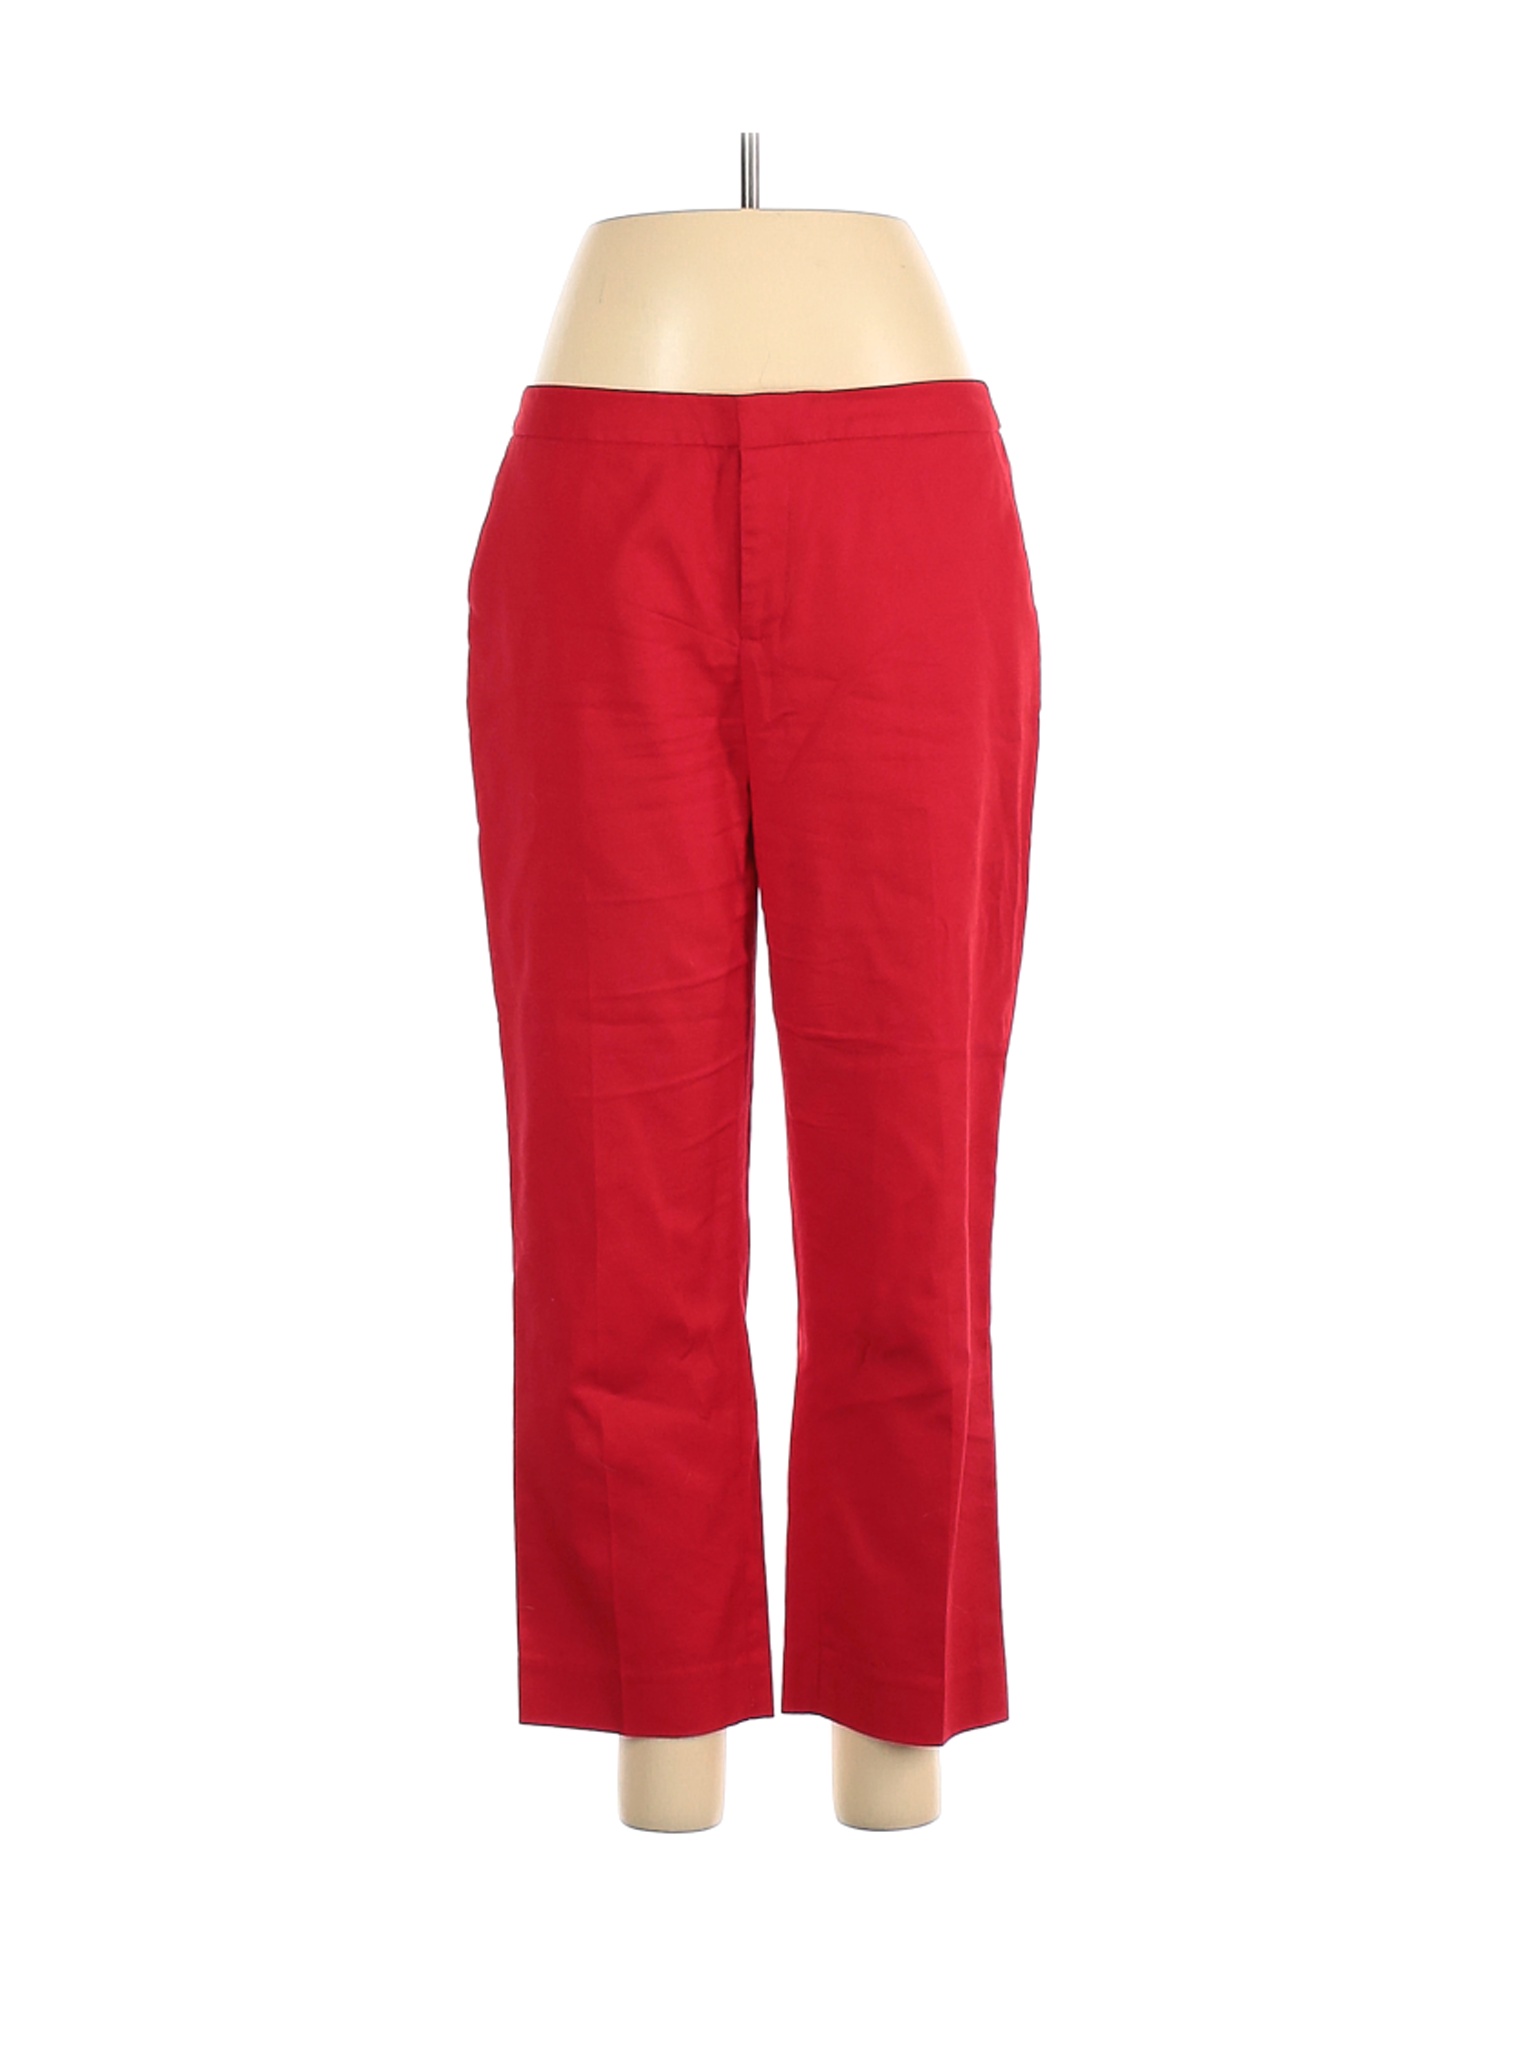 Banana Republic Factory Store Women Red Dress Pants 8 | eBay